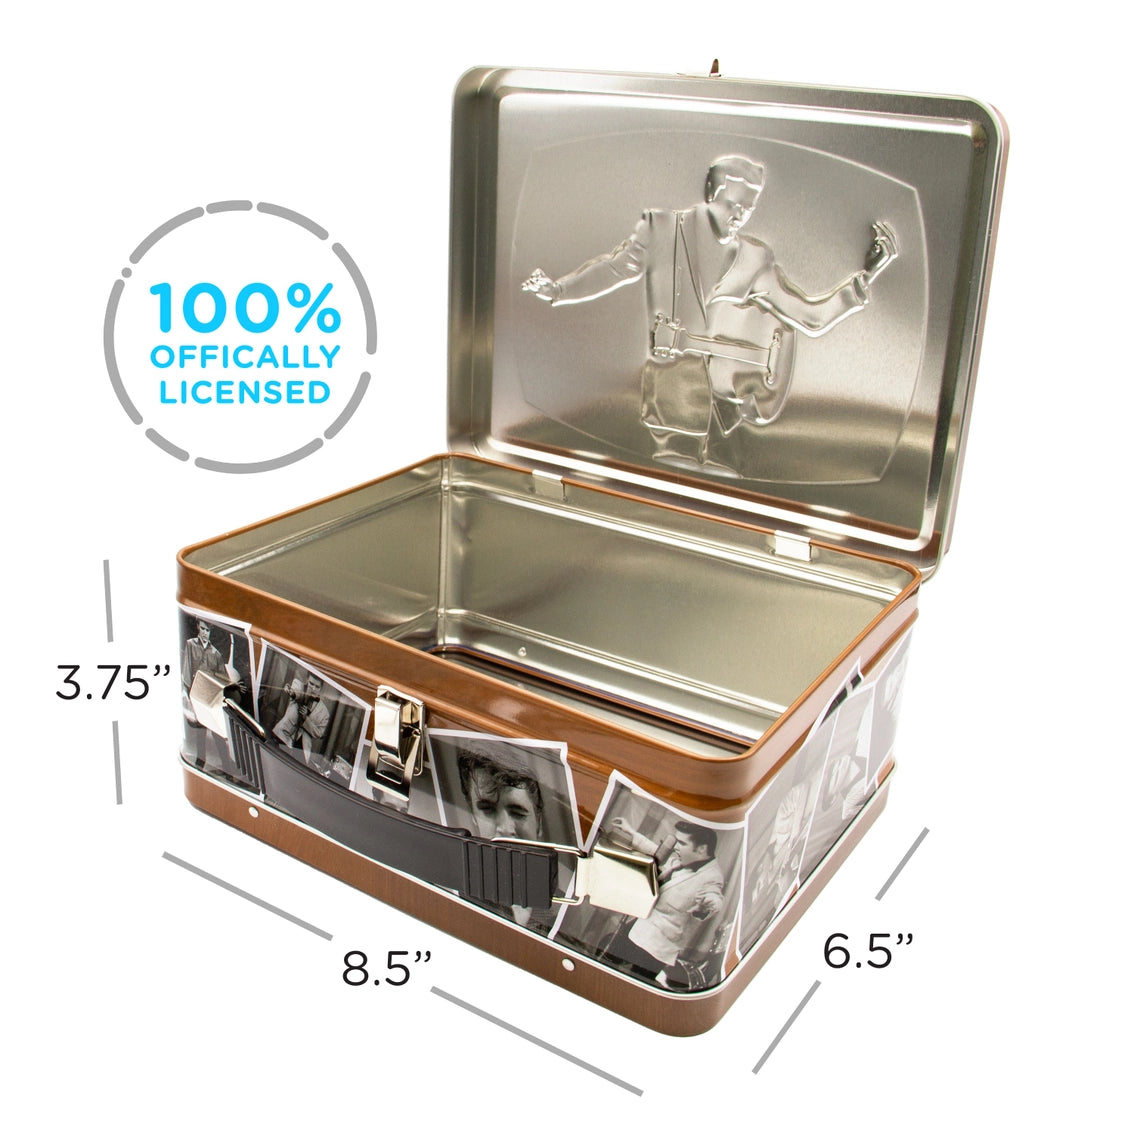 Elvis TV Style Tin Lunch Box